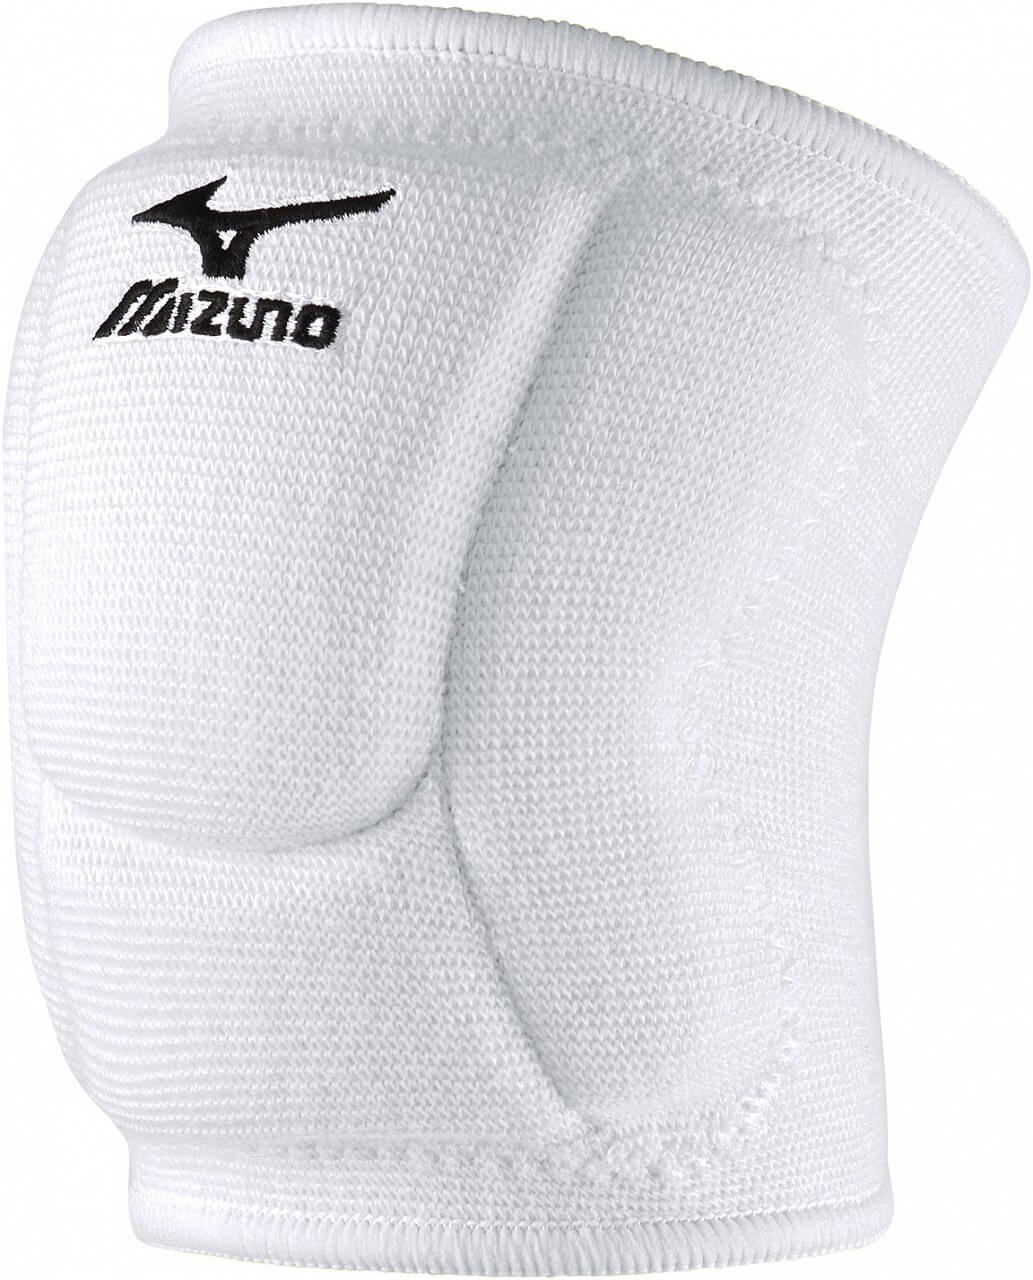 Para rzepek. Mizuno VS1 Compact kneepad